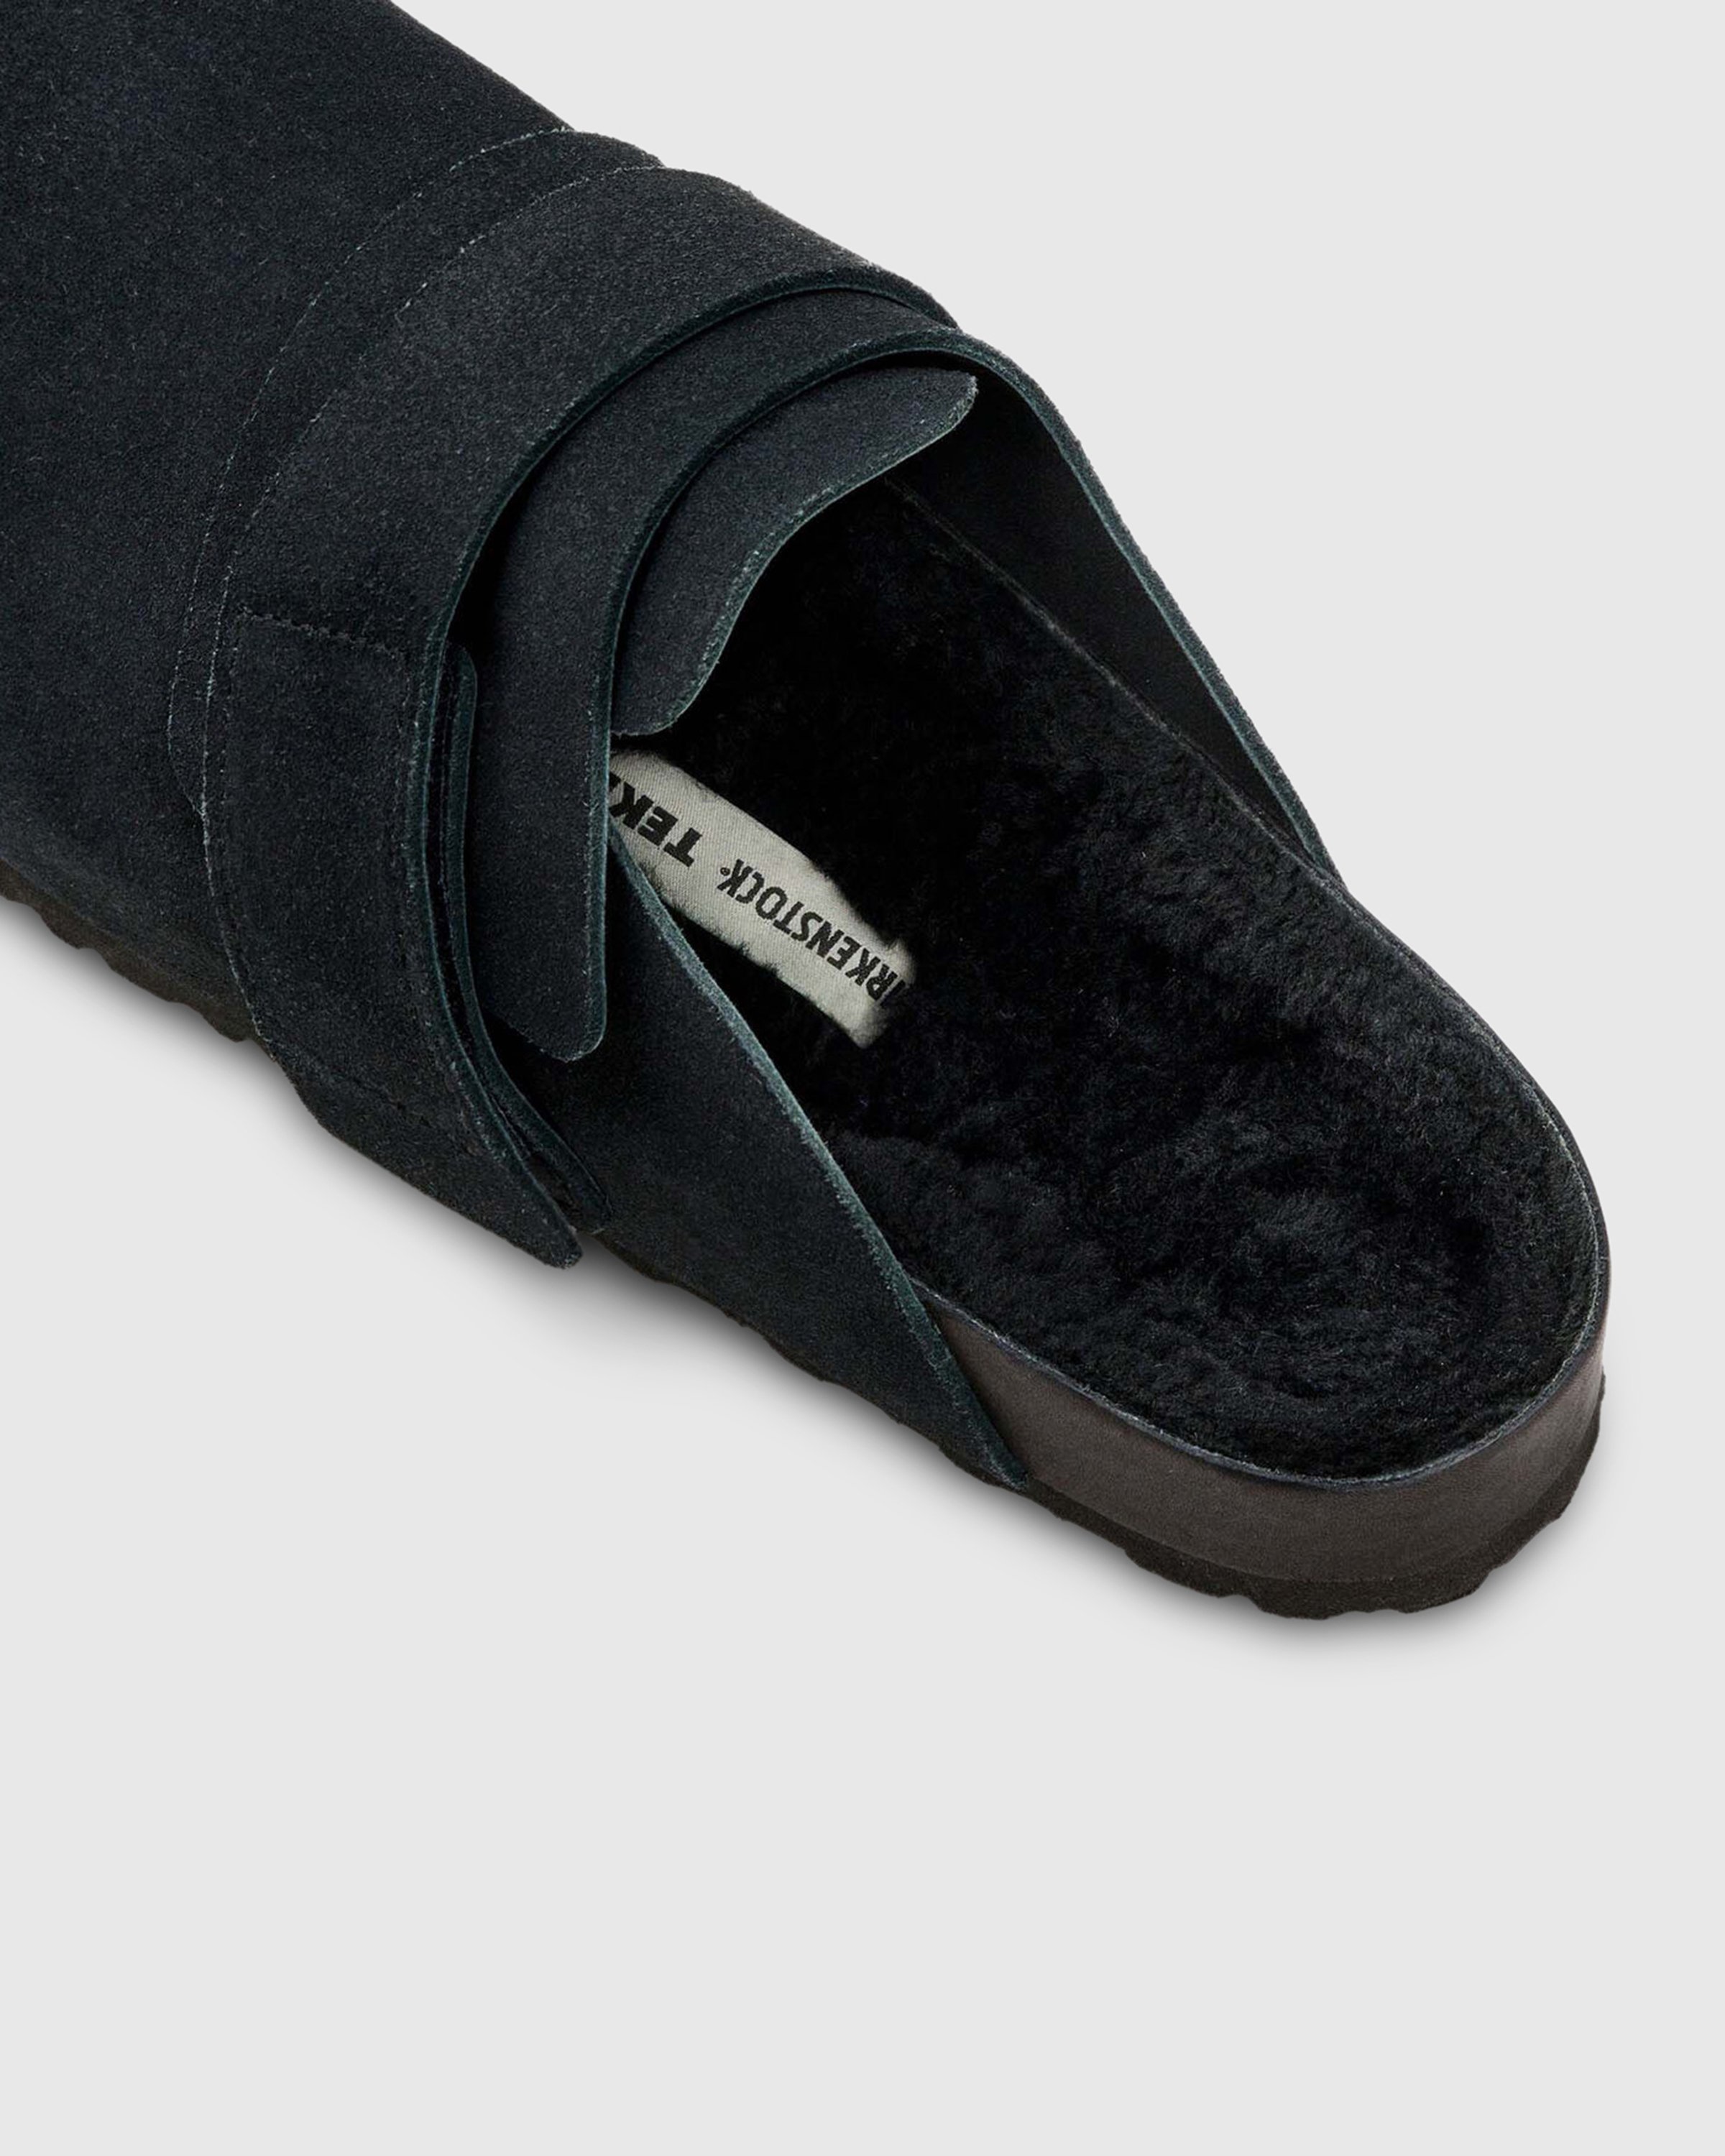 Birkenstock x Tekla - Shearling Nagoya Slate/Black - Footwear - Black - Image 4